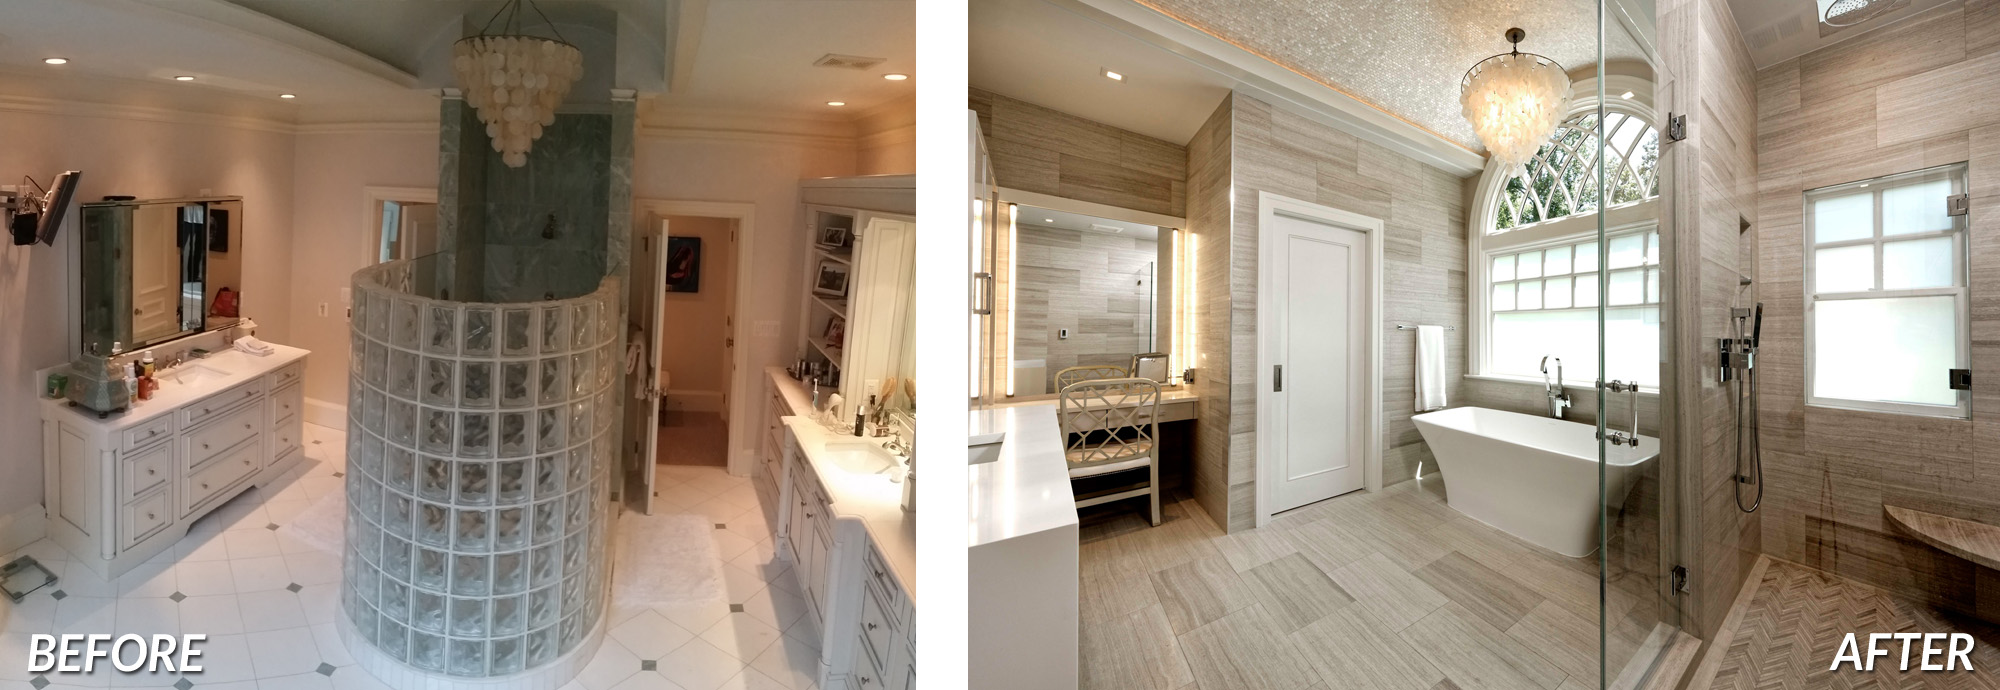 BOWA Design Design Build - McLean Bathroom Renovation Before & After